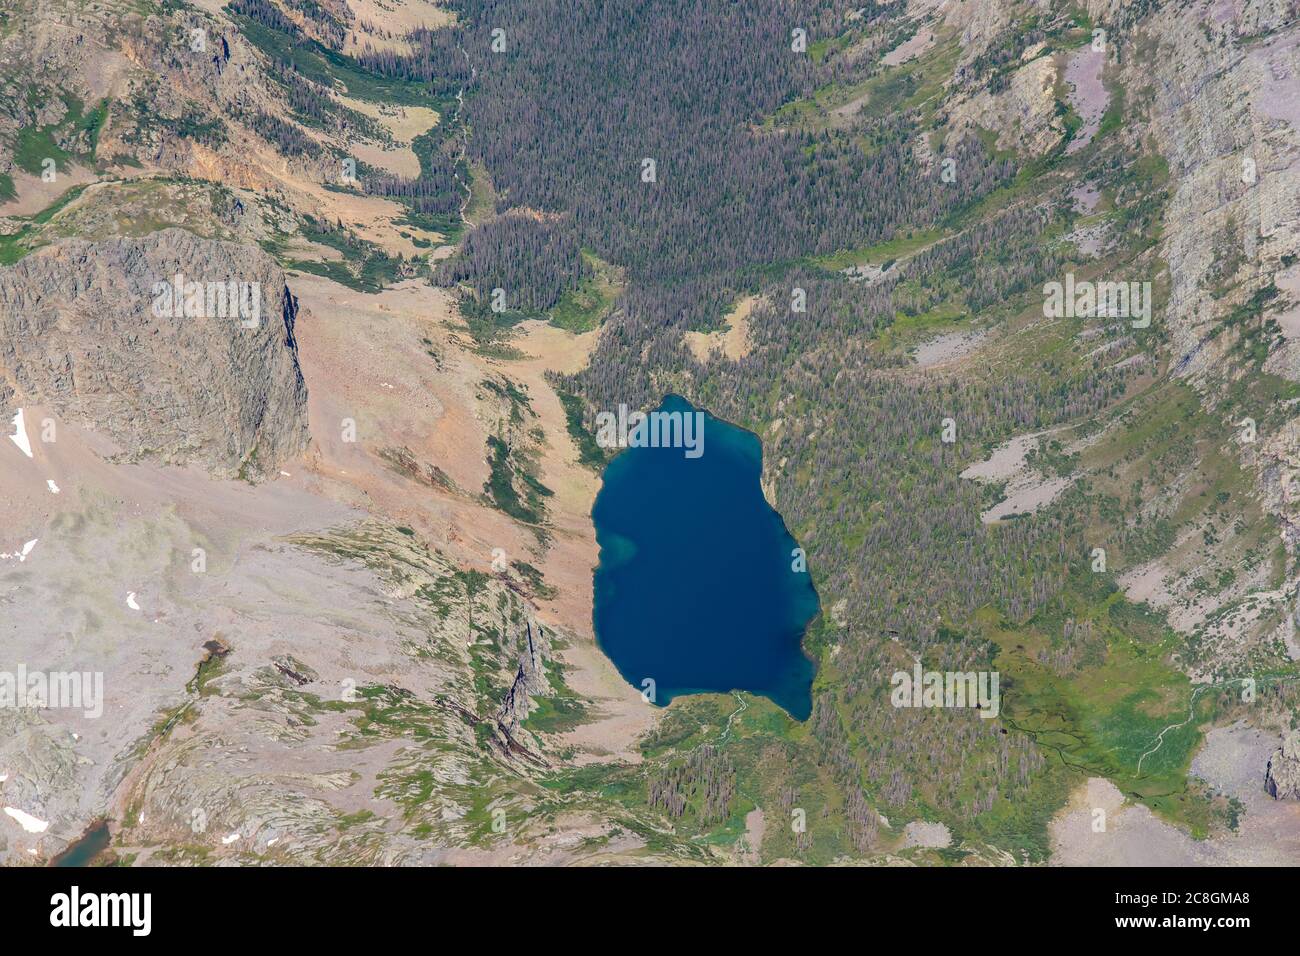 Aerial View of Balsam Lake, Weminuche Wilderness Area, San Juan Mountains, Colorado Stock Photo